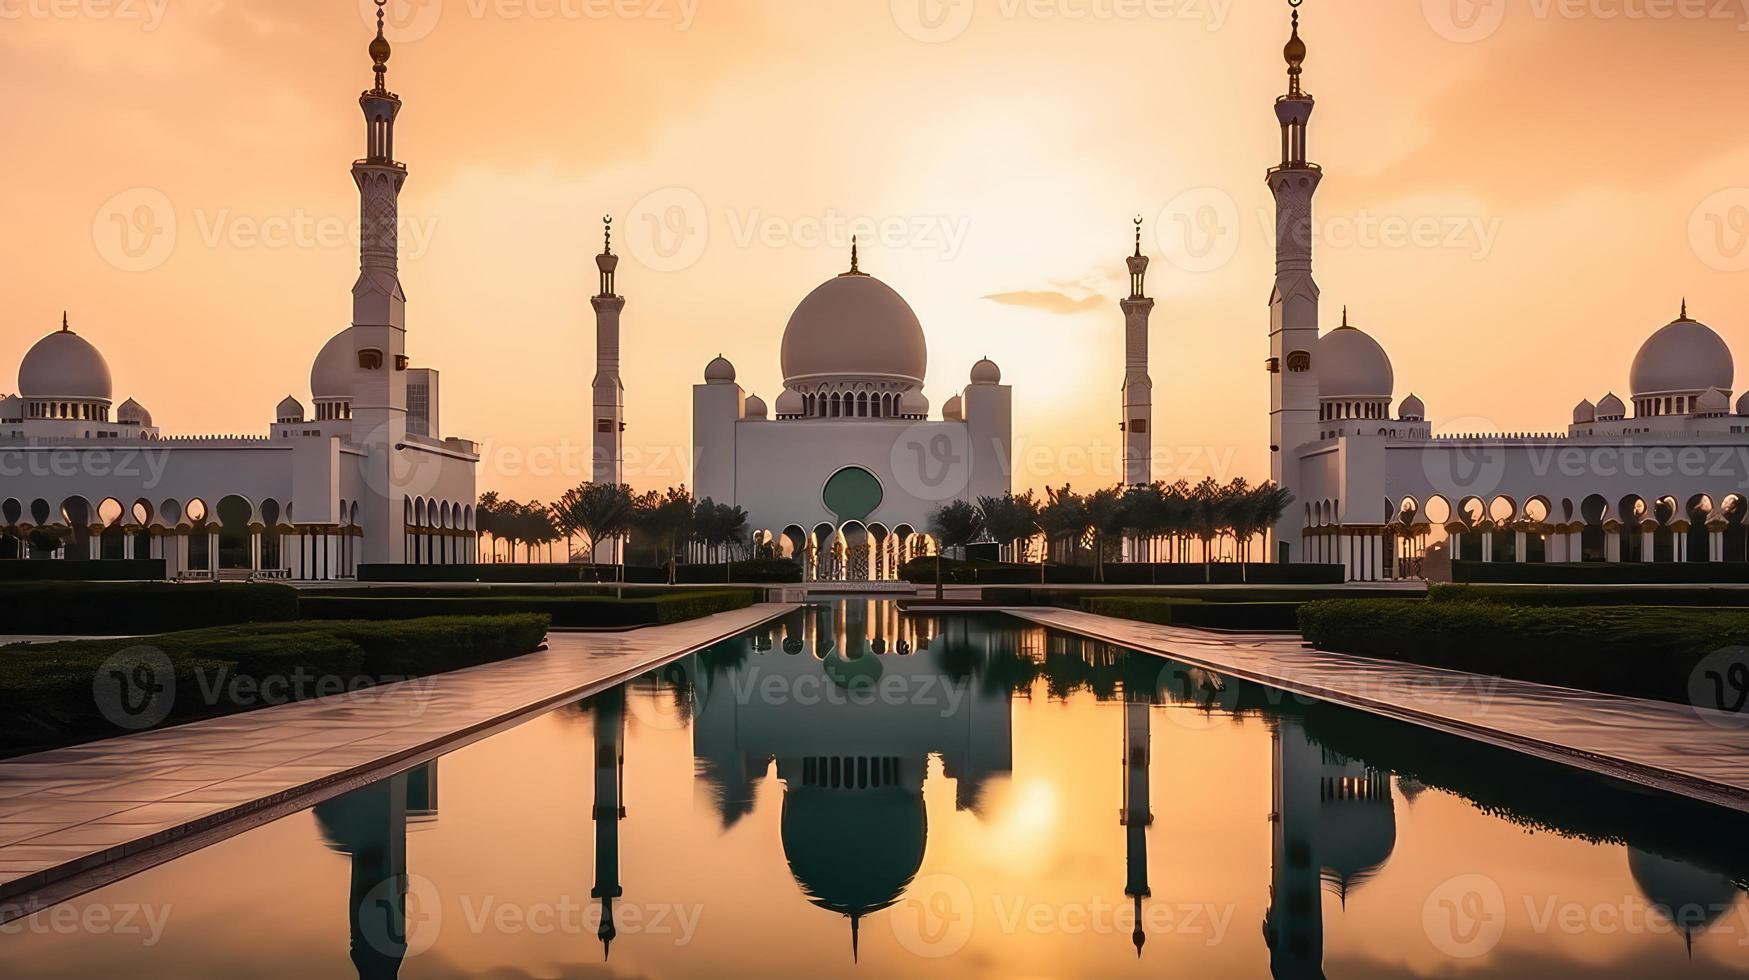 abu dhabi, uae, sheikh zayed stor moské i de abu dhabi, förenad arab emirates på en solnedgång se bakgrund. foto